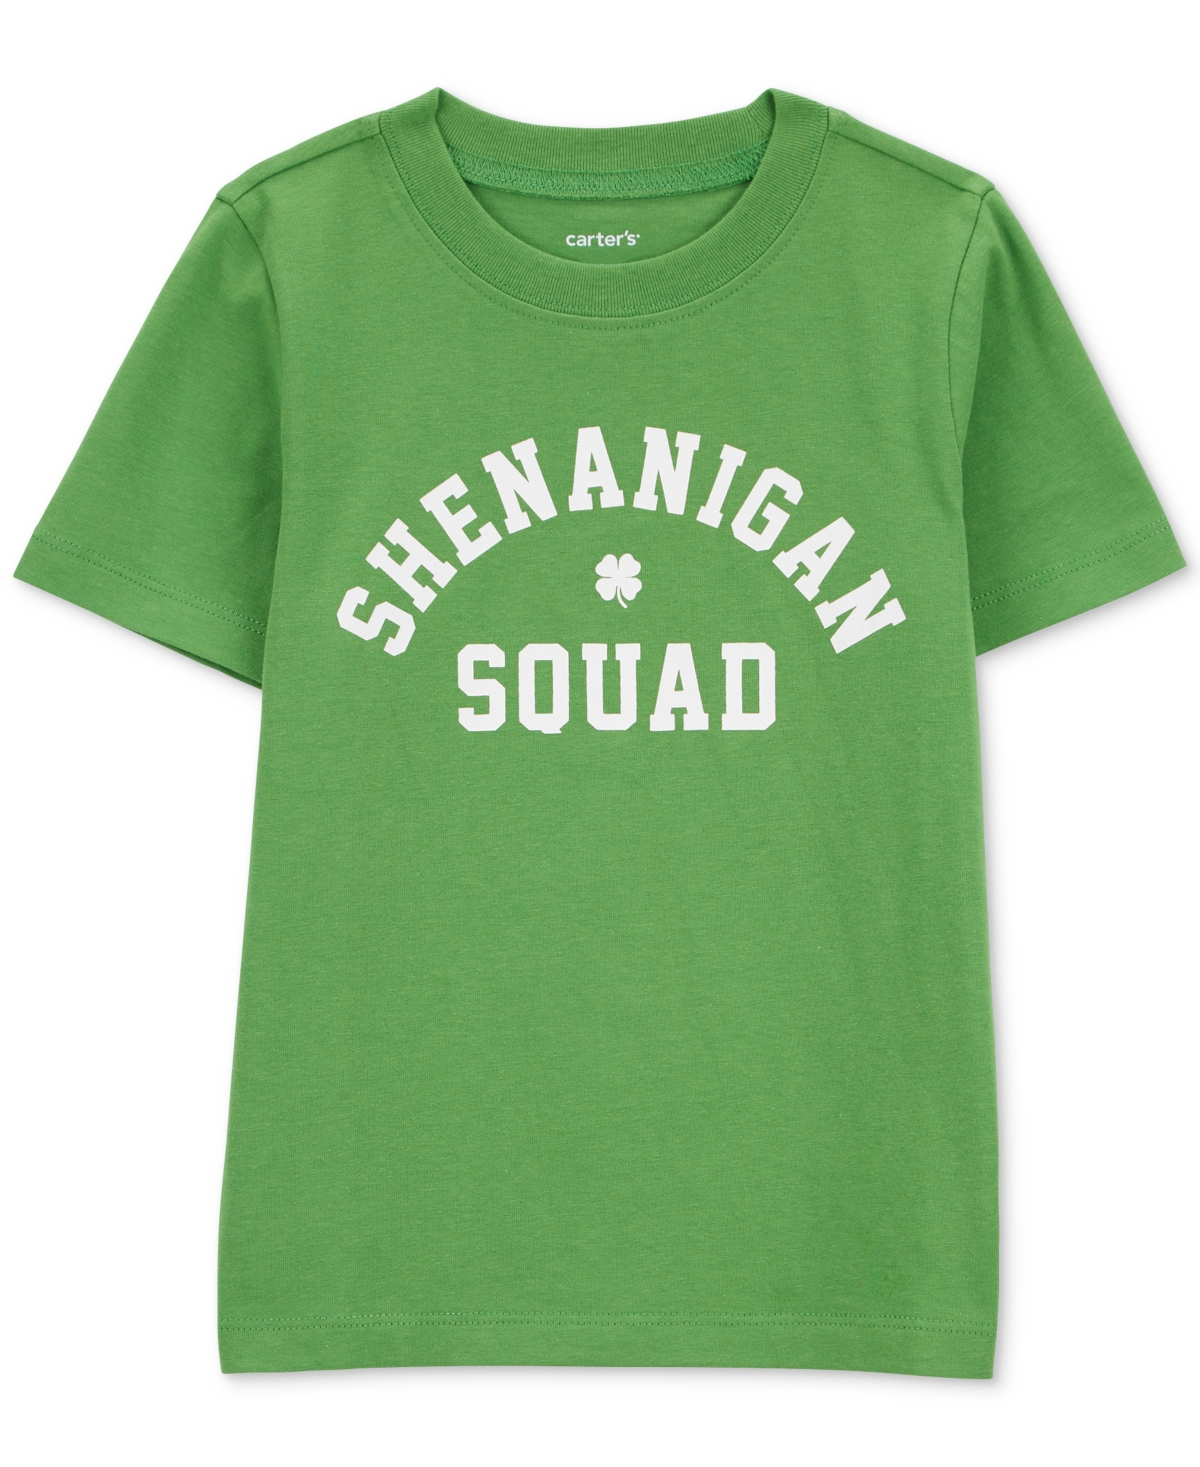 Carter's Babies' Toddler Boys Shenanigan Squad Printed T-shirt In Green